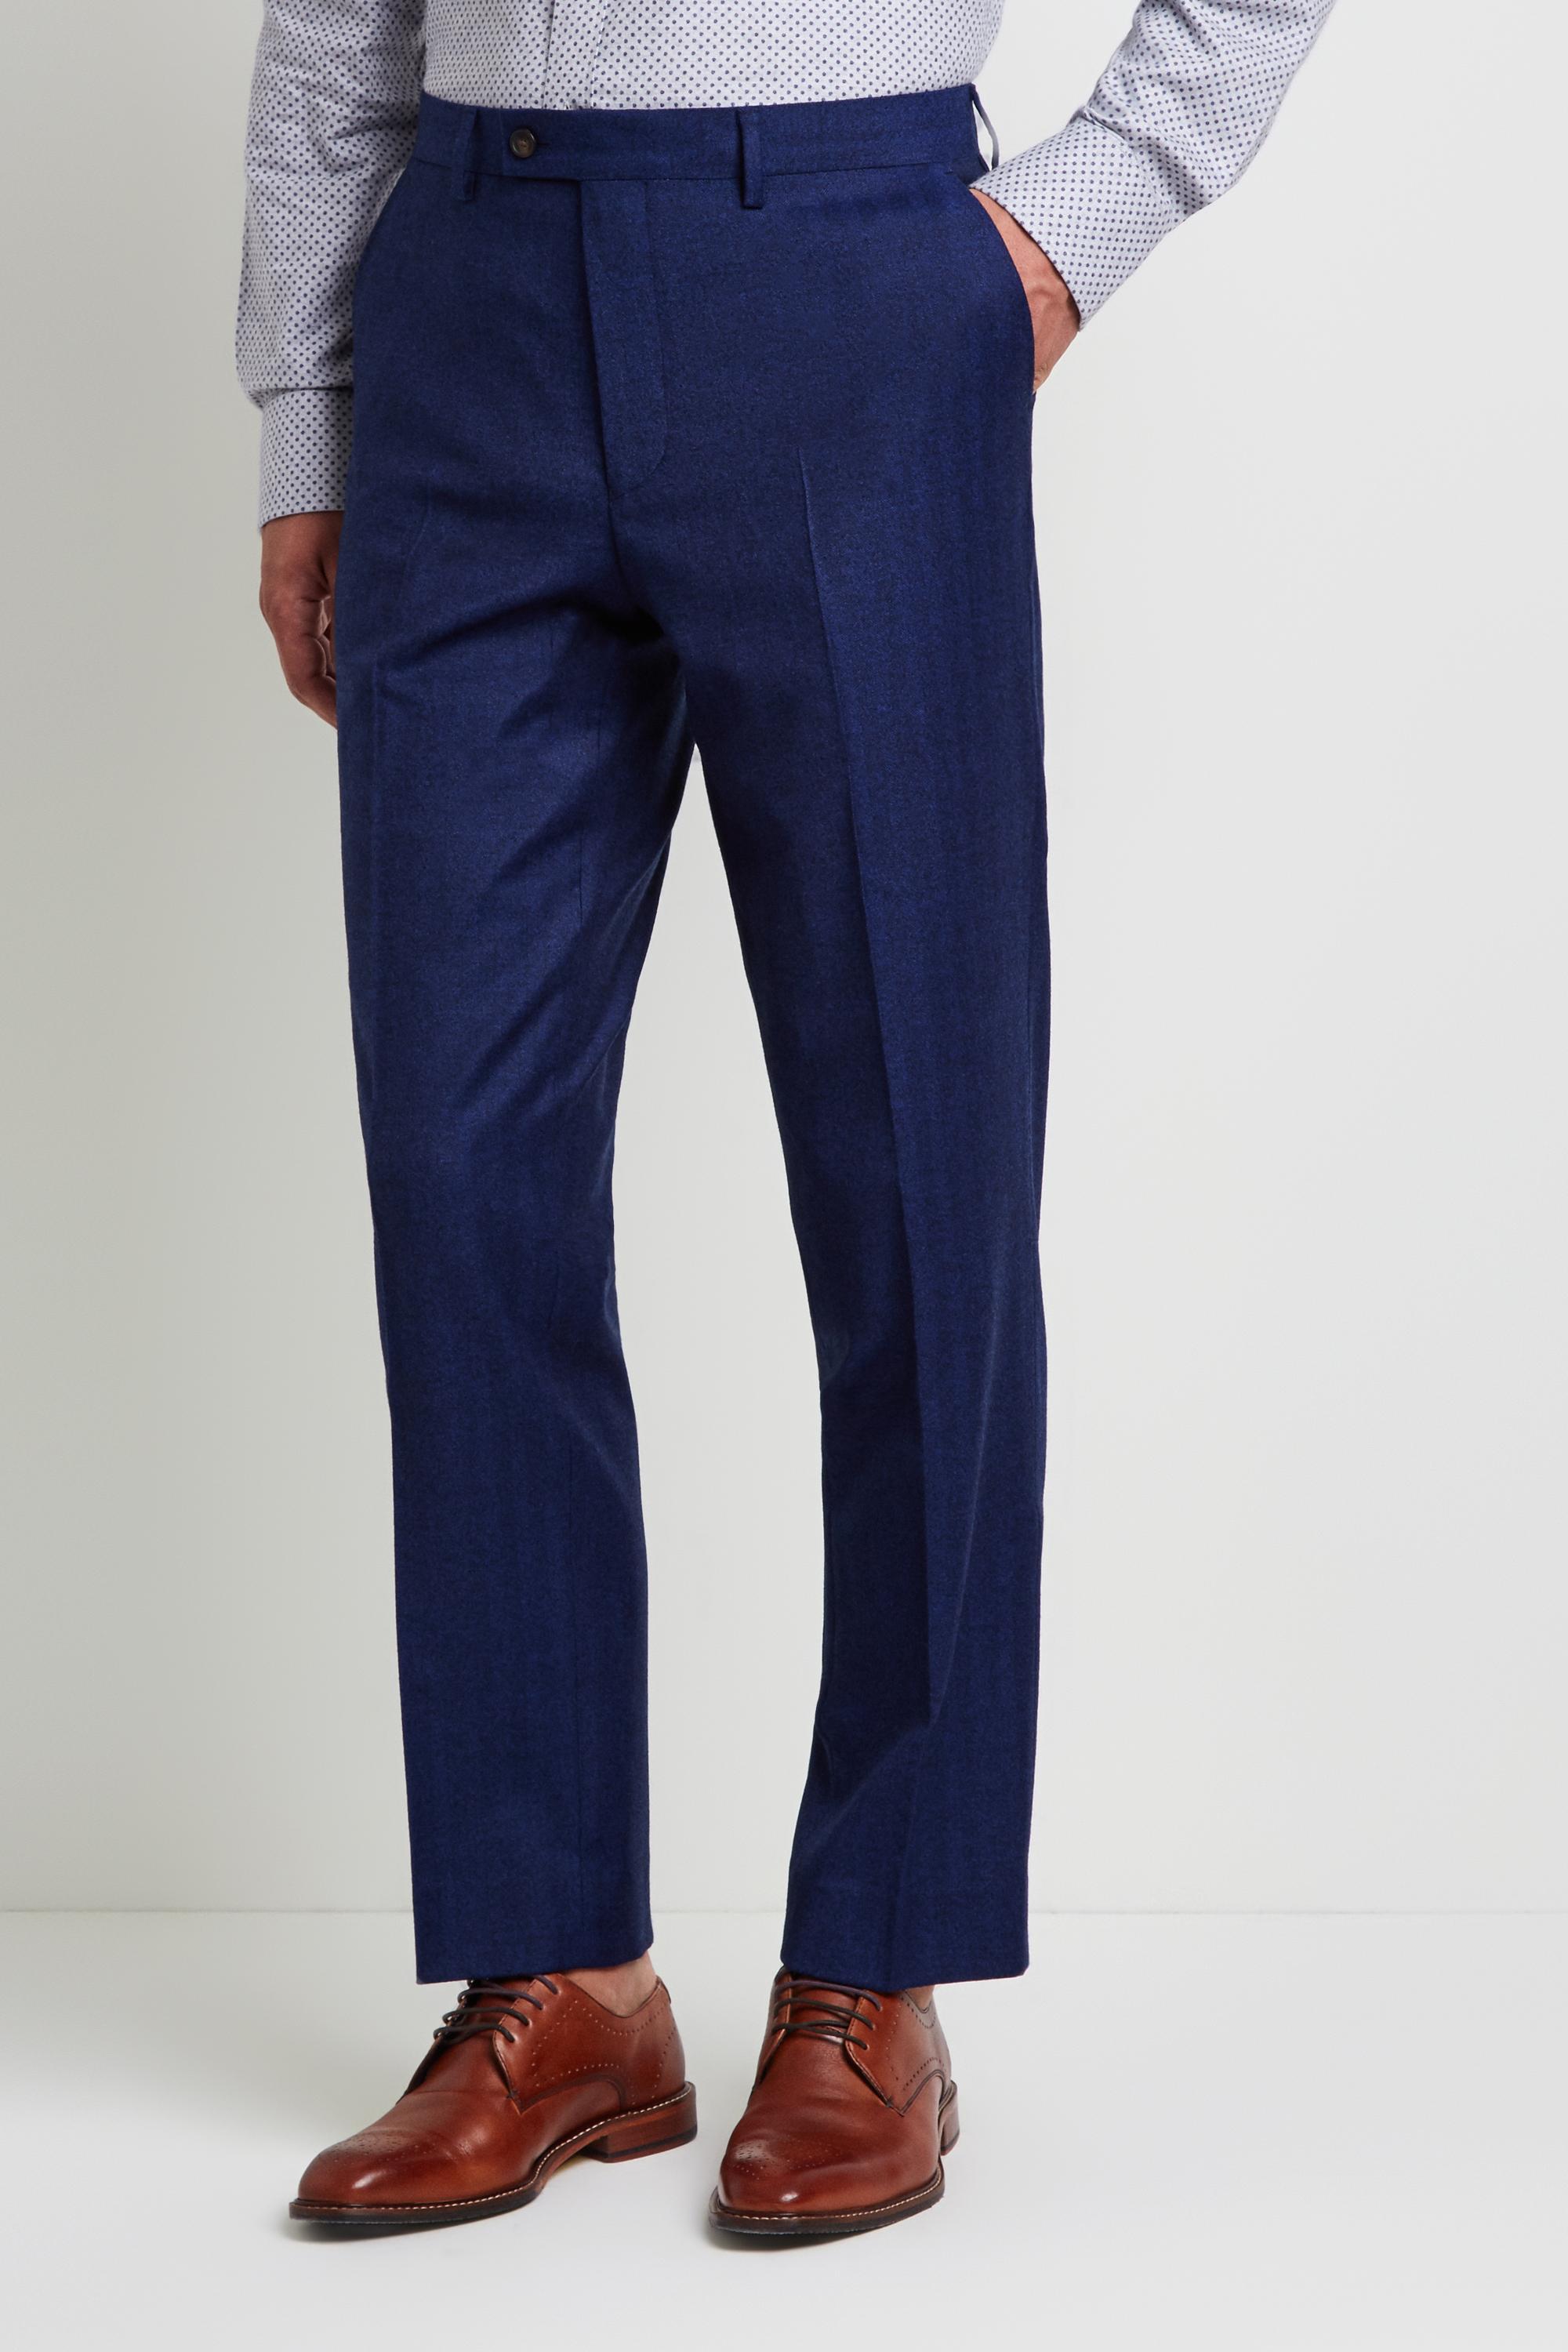 Ted Baker Wool Gold Tailored Fit Blue Herringbone Trousers in Metallic ...